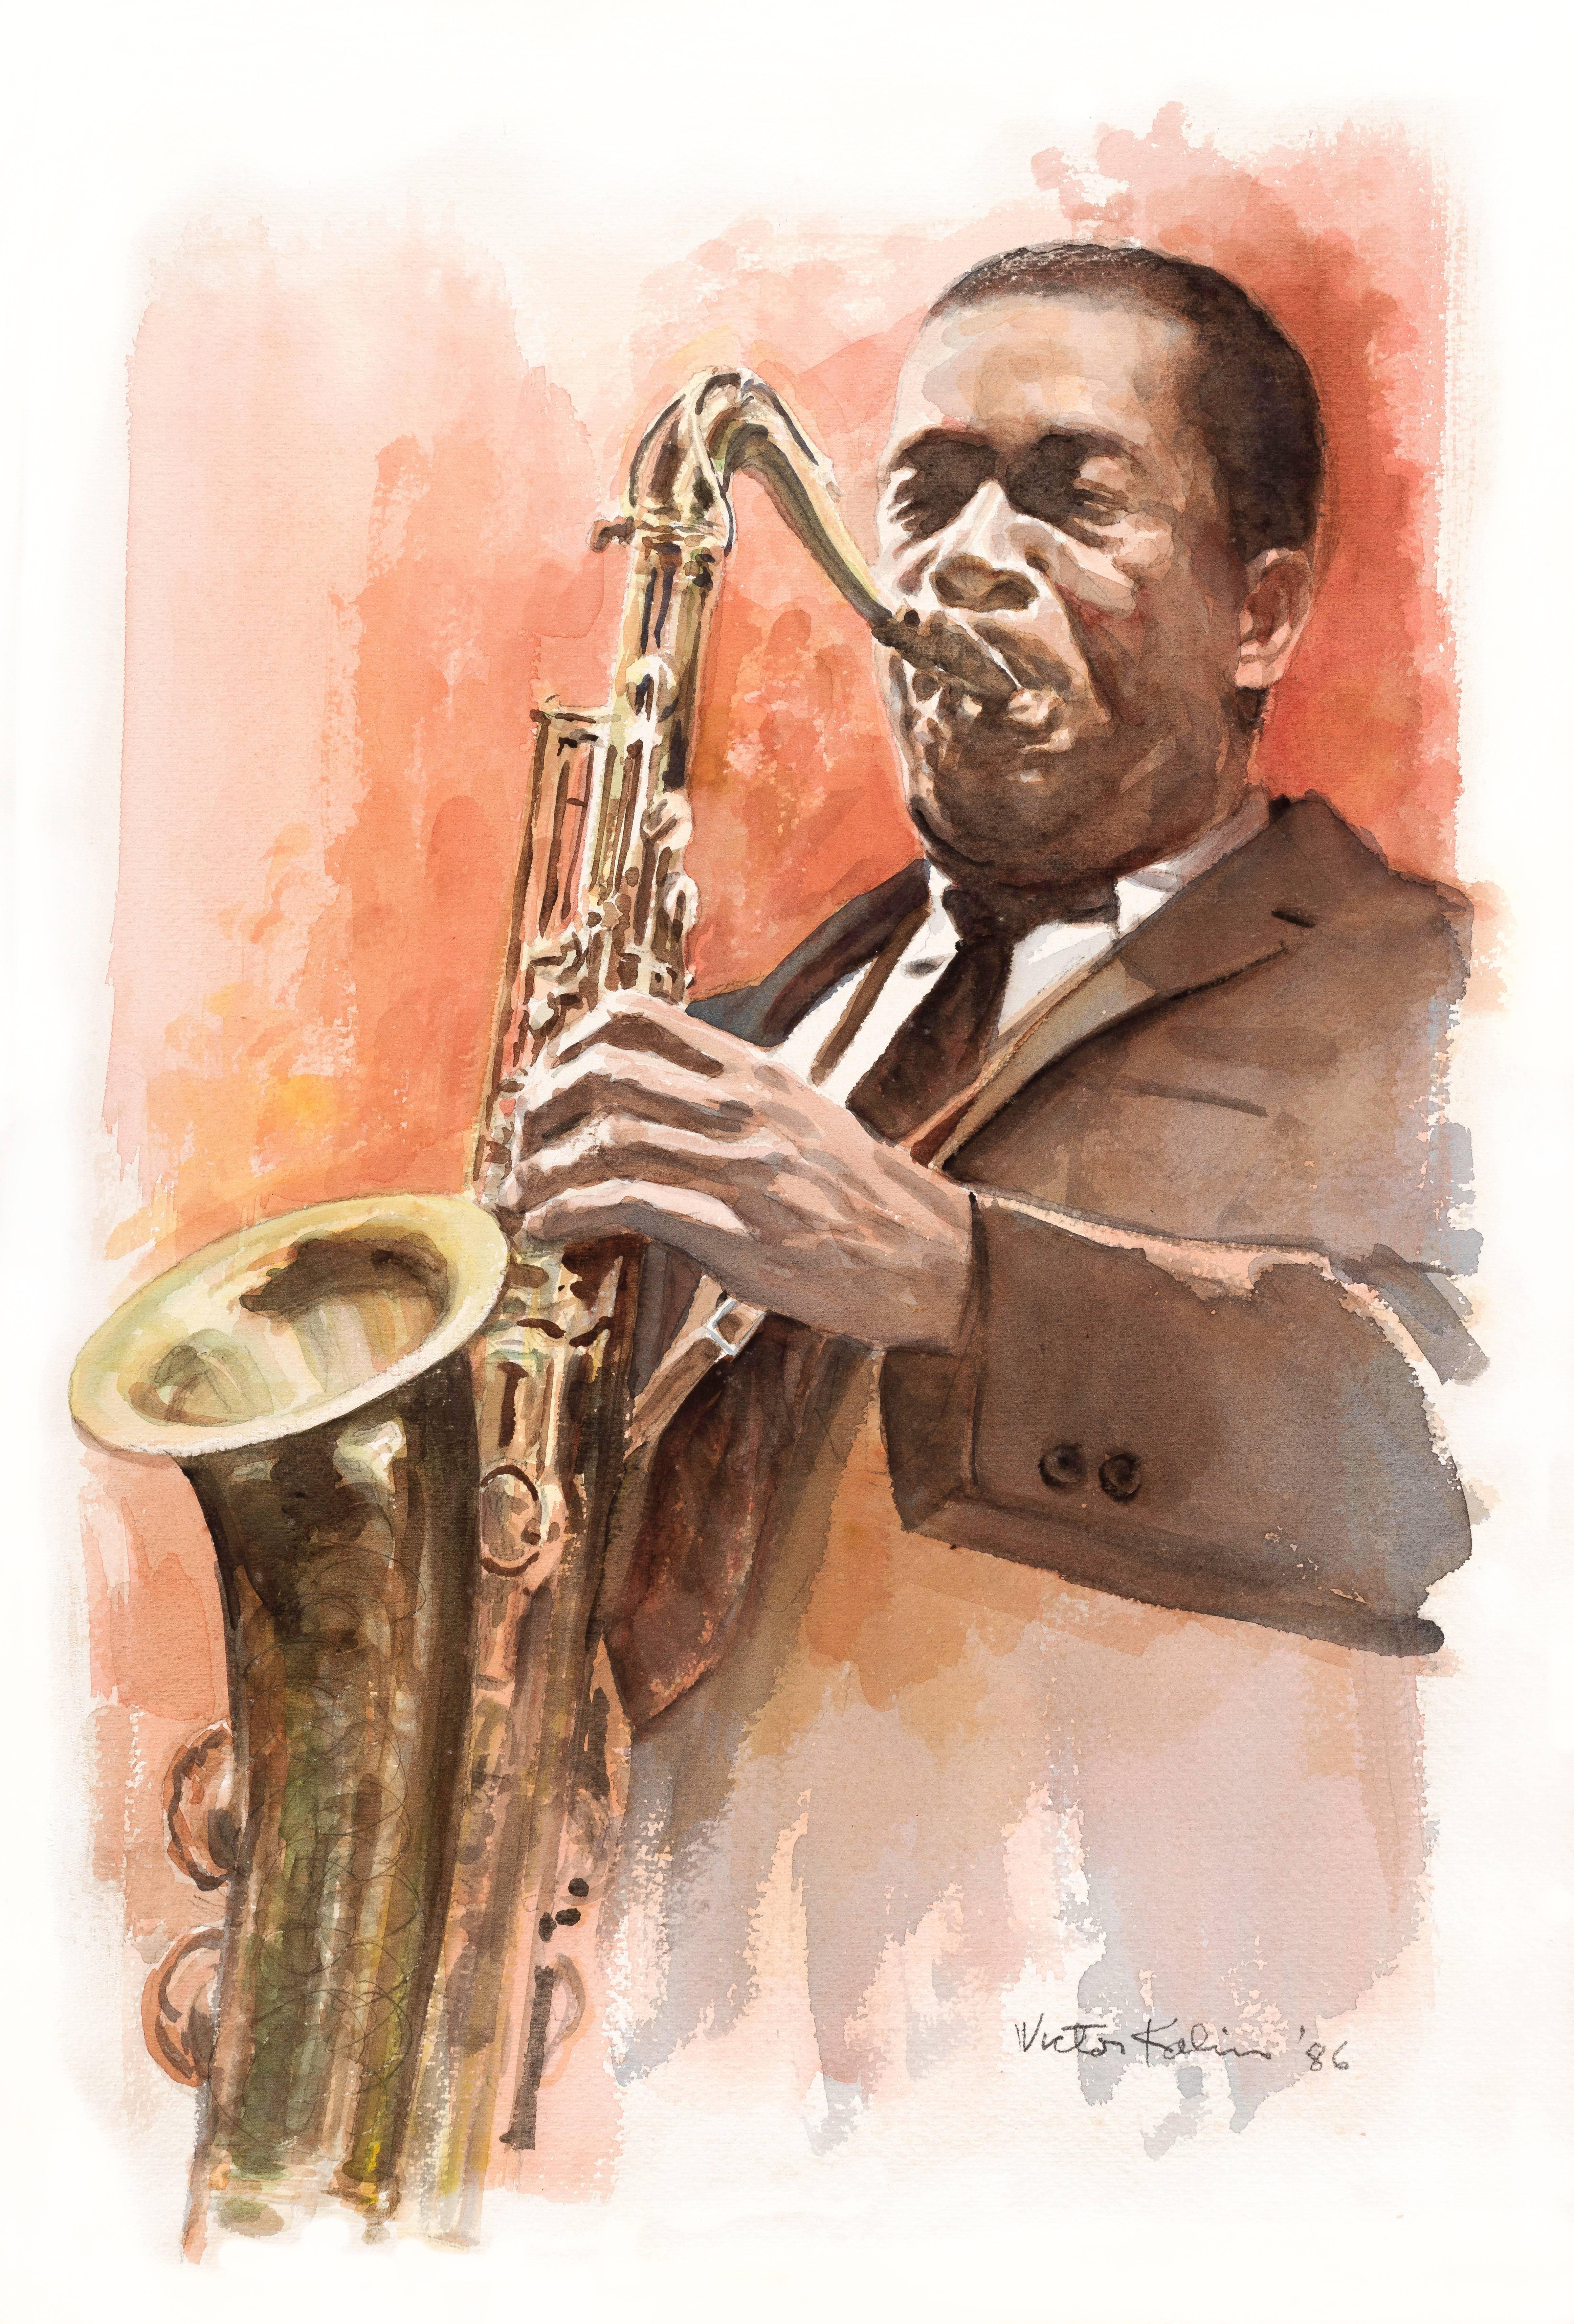 John Coltrane Portrait - Appeared in Love Supreme Album Revised  - Art by Victor Kalin